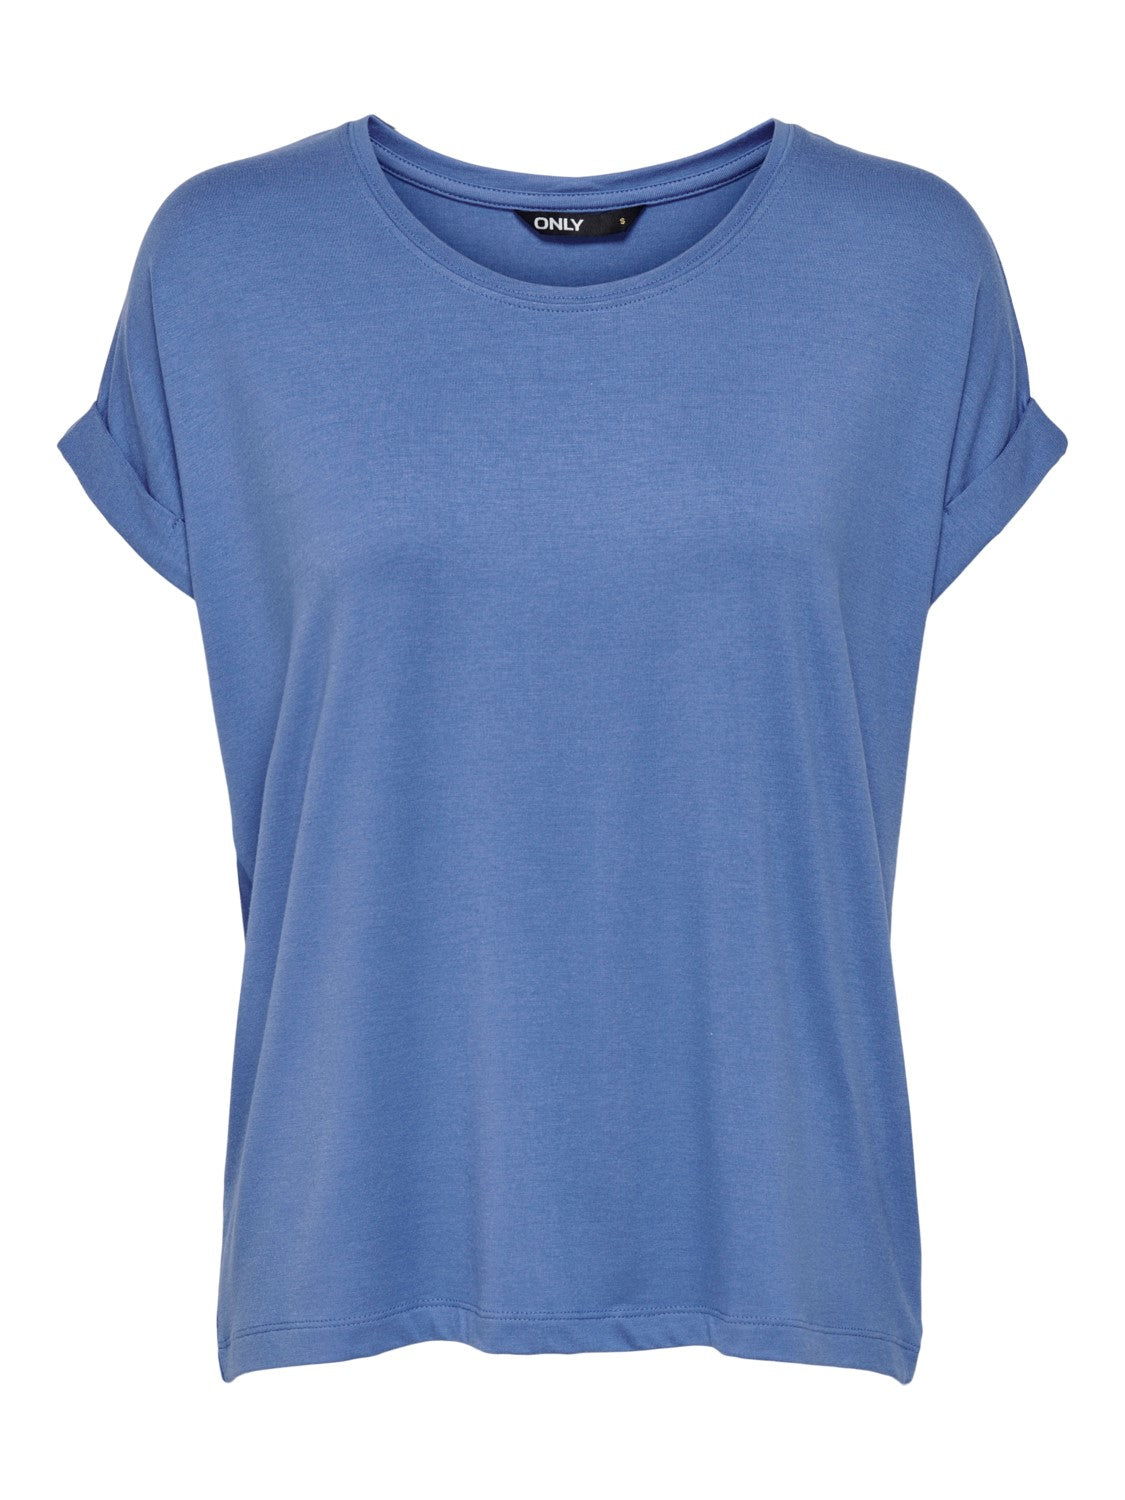 Moster T-Shirt - Blue Yonder